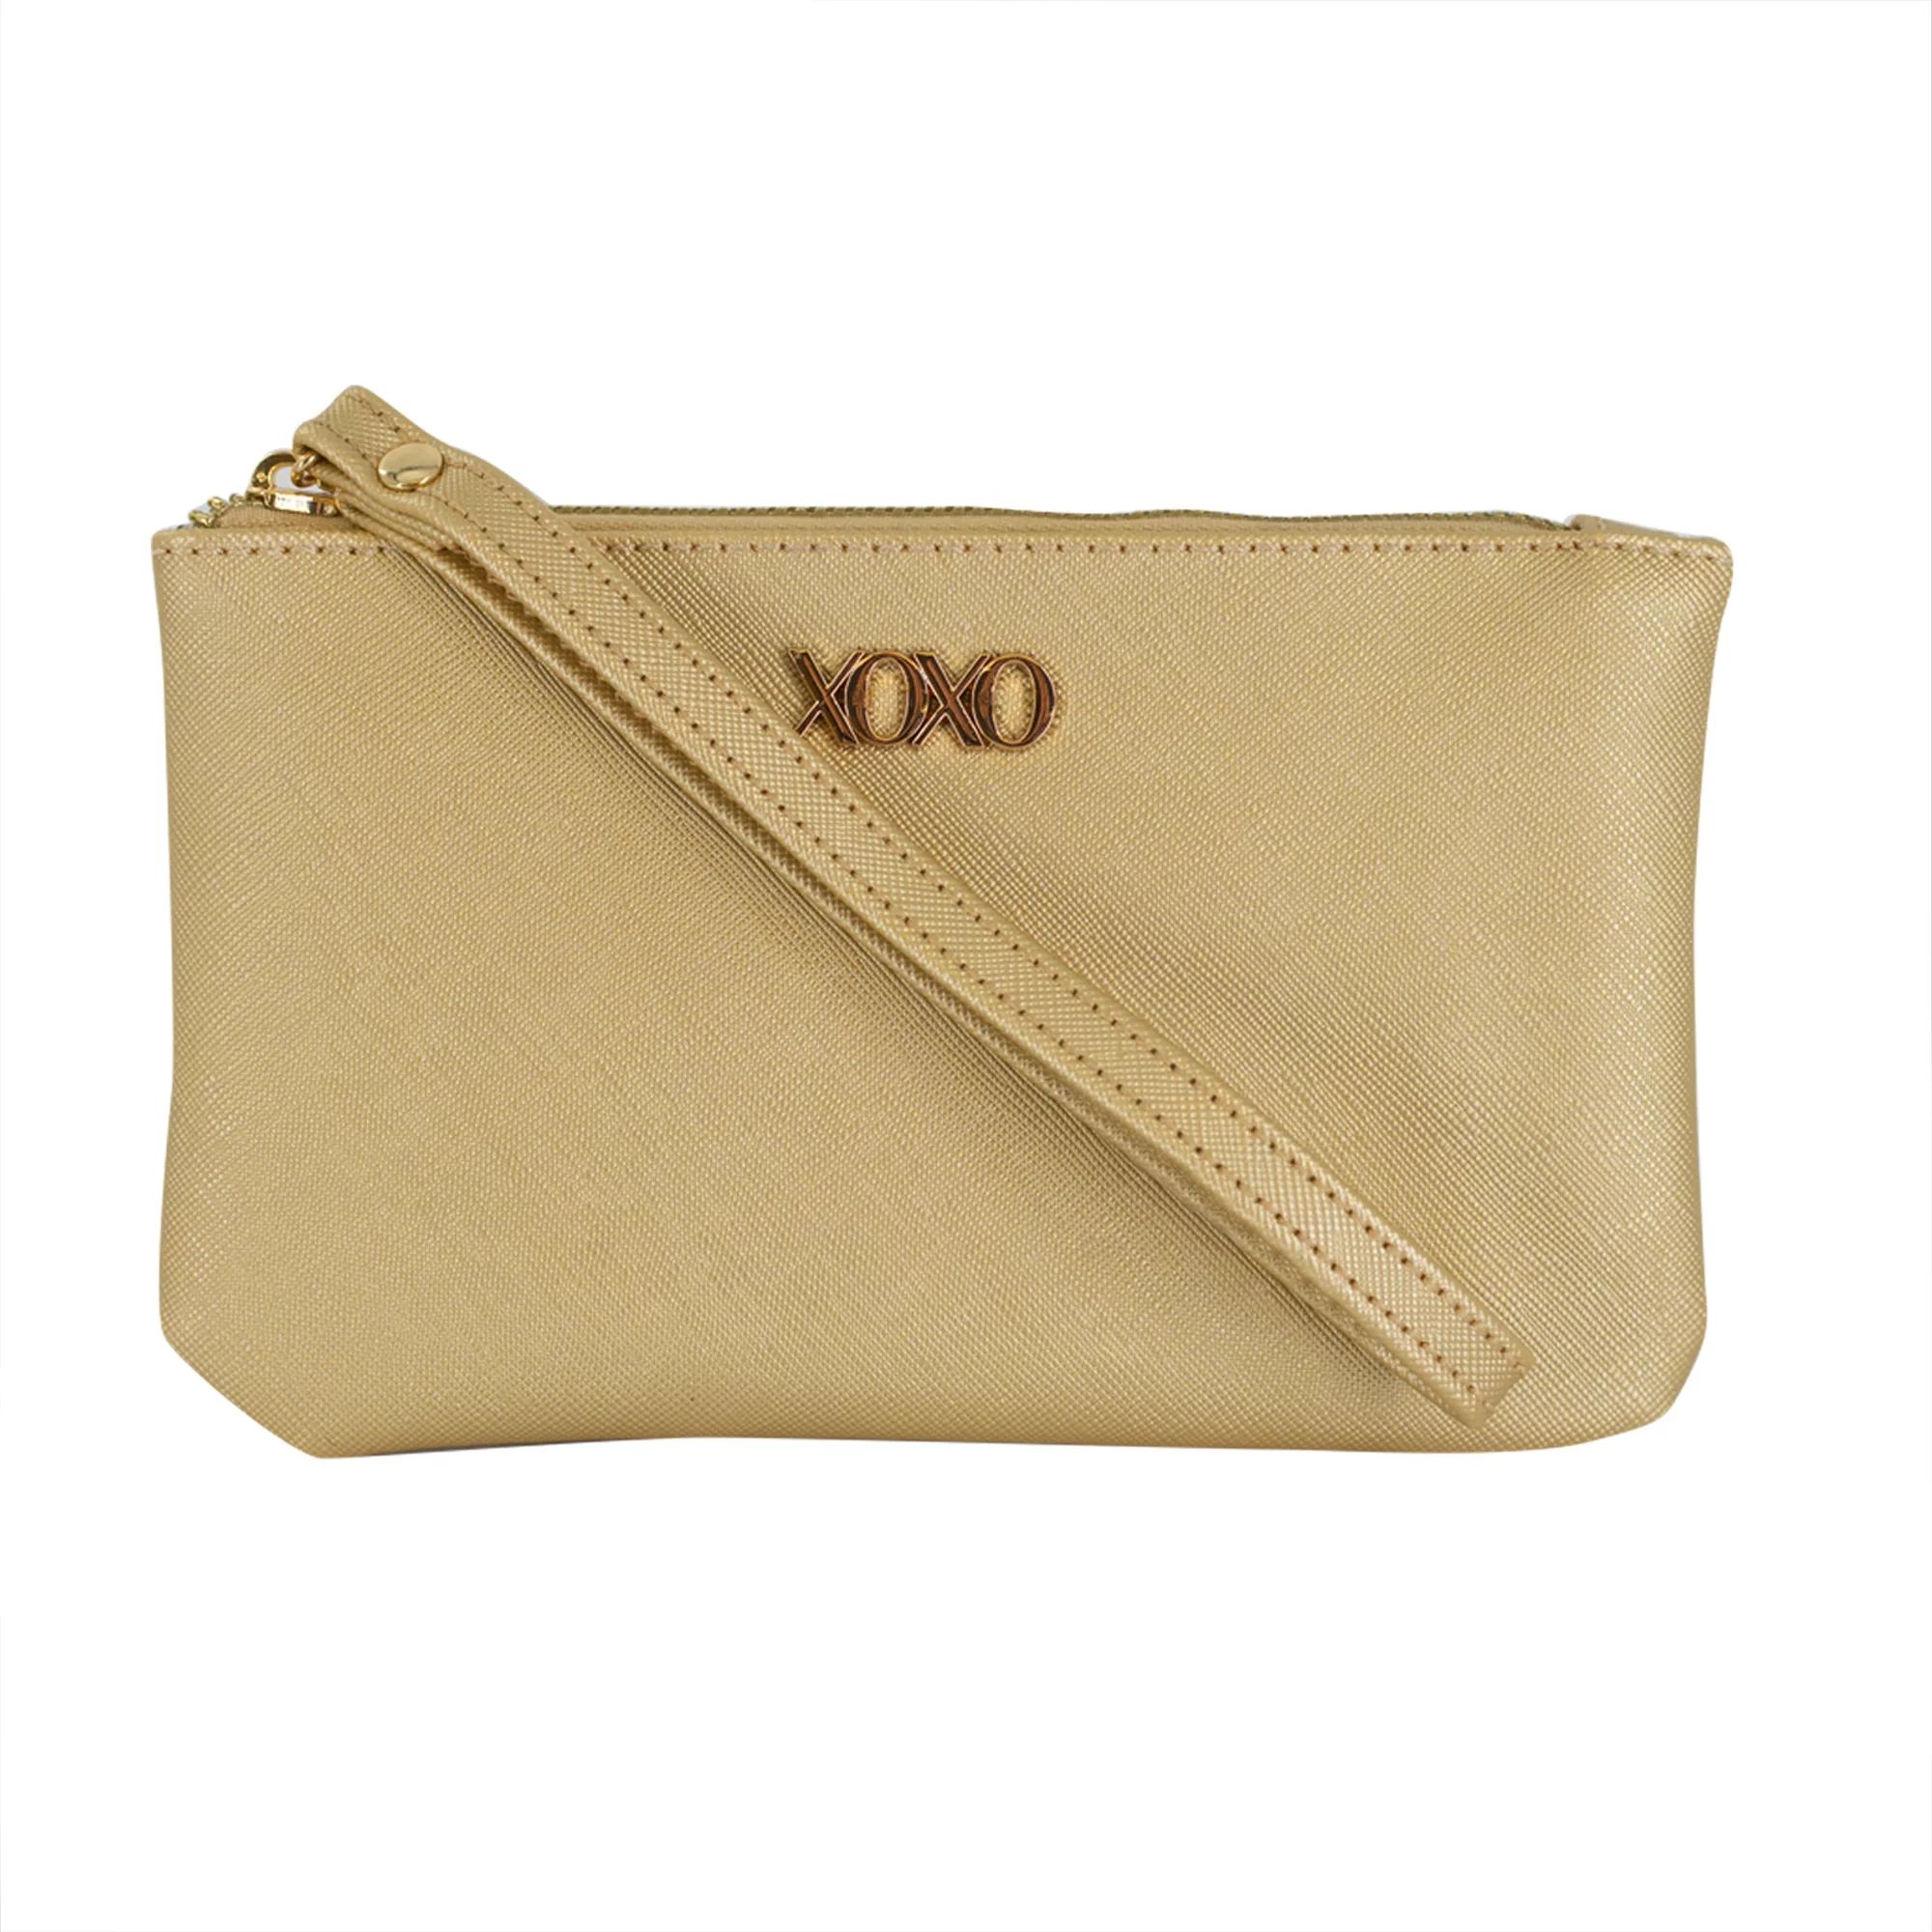 XOXO Women’s Large Metallic Gold Saffiano Leather Solid / Patterned Wristlet Wallet | Walmart (US)